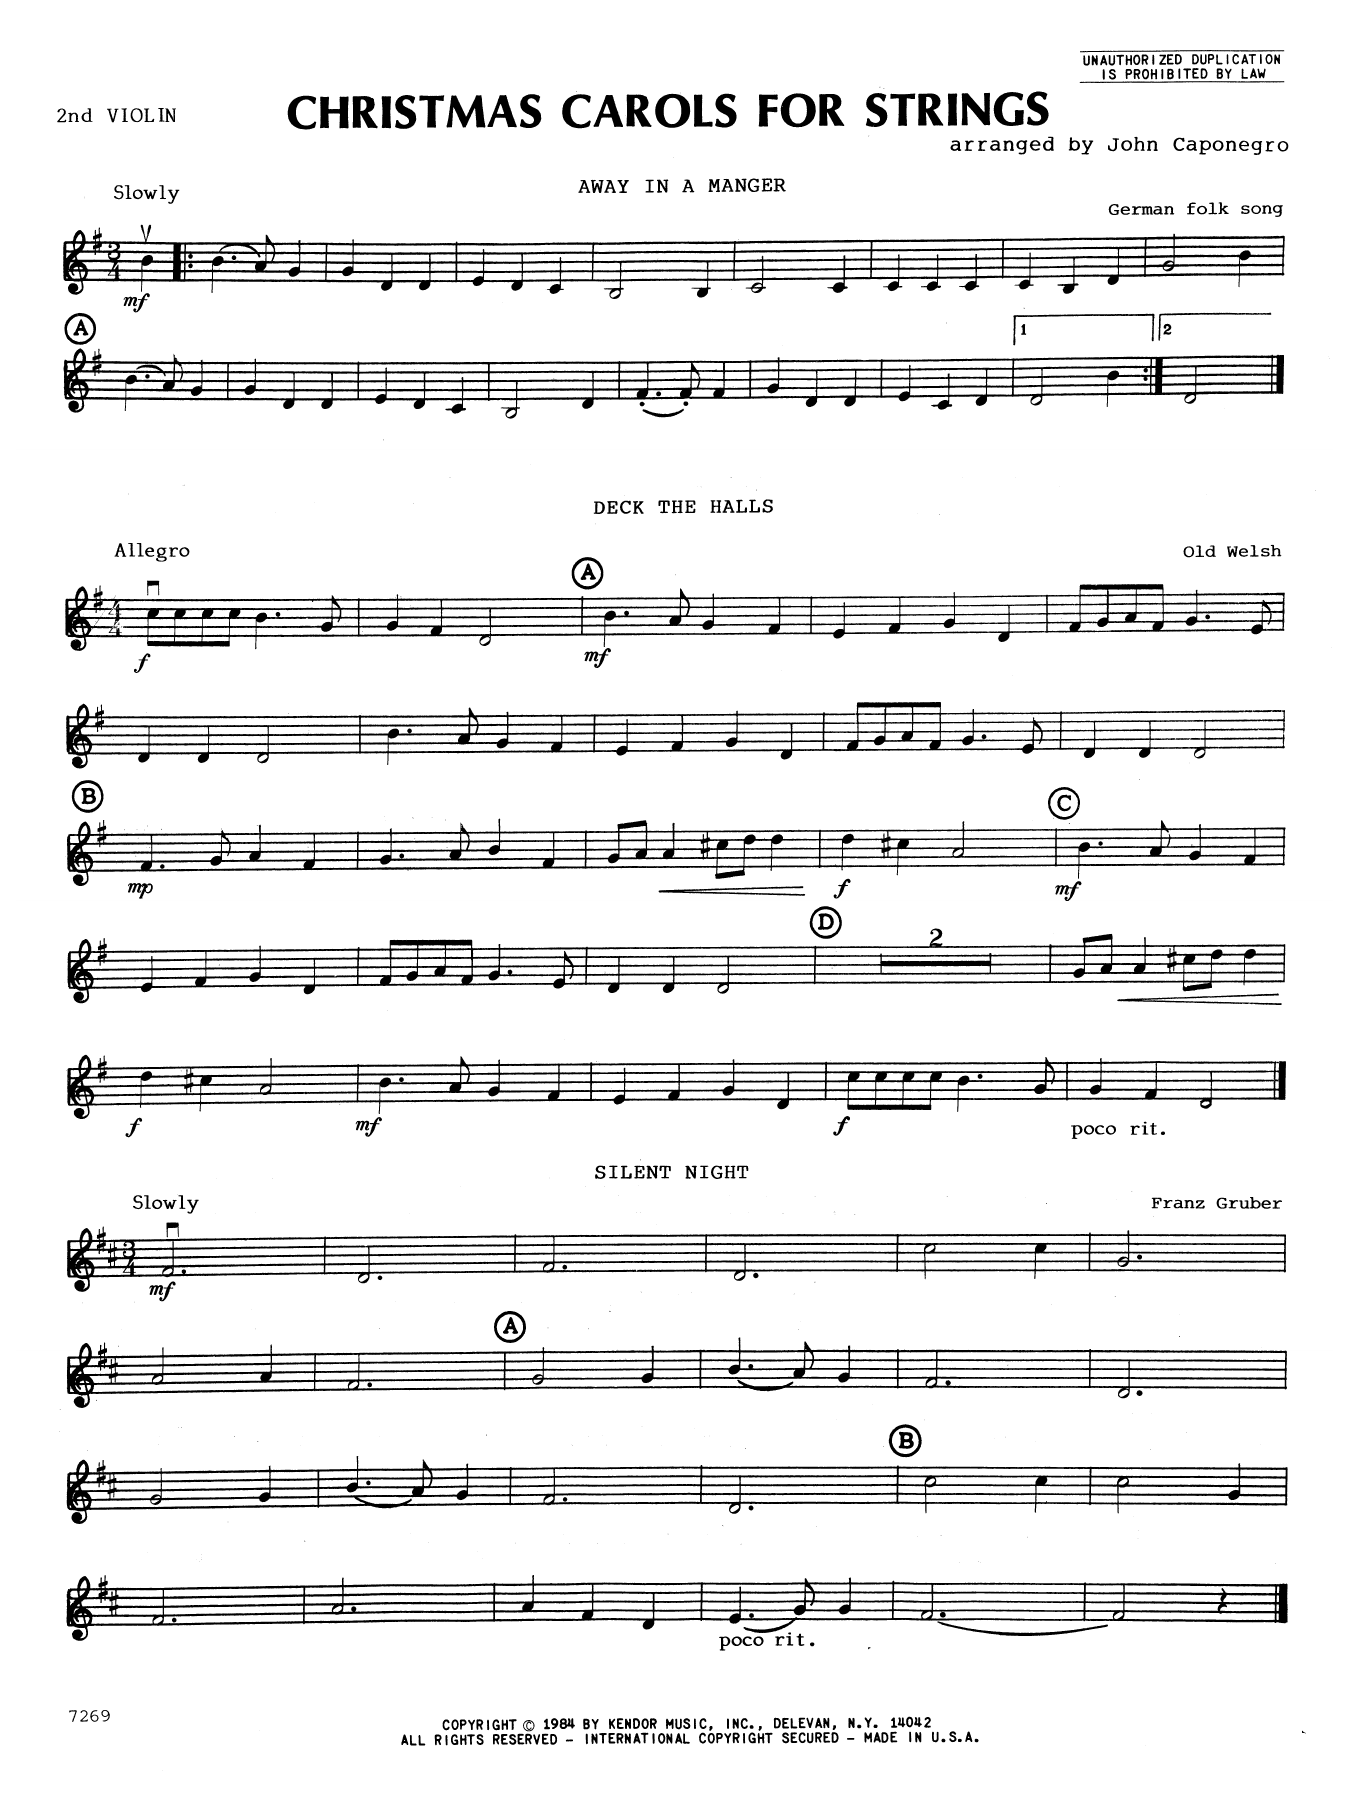 Download John Caponegro Christmas Carols for Strings - 2nd Viol Sheet Music